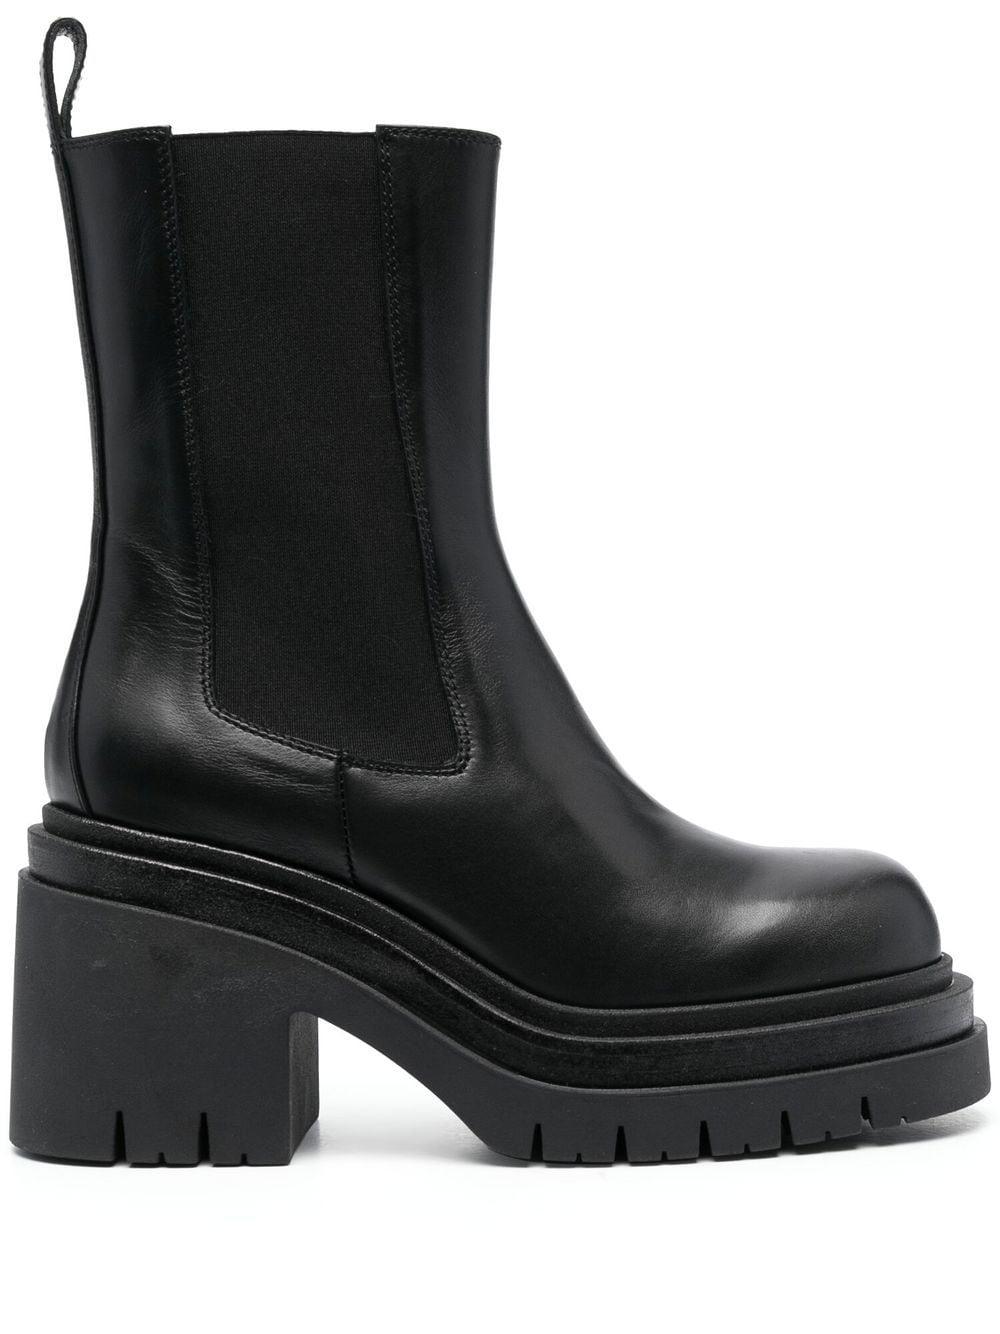 SCAROSSO Elle Platform Leather Boots in Black | Lyst